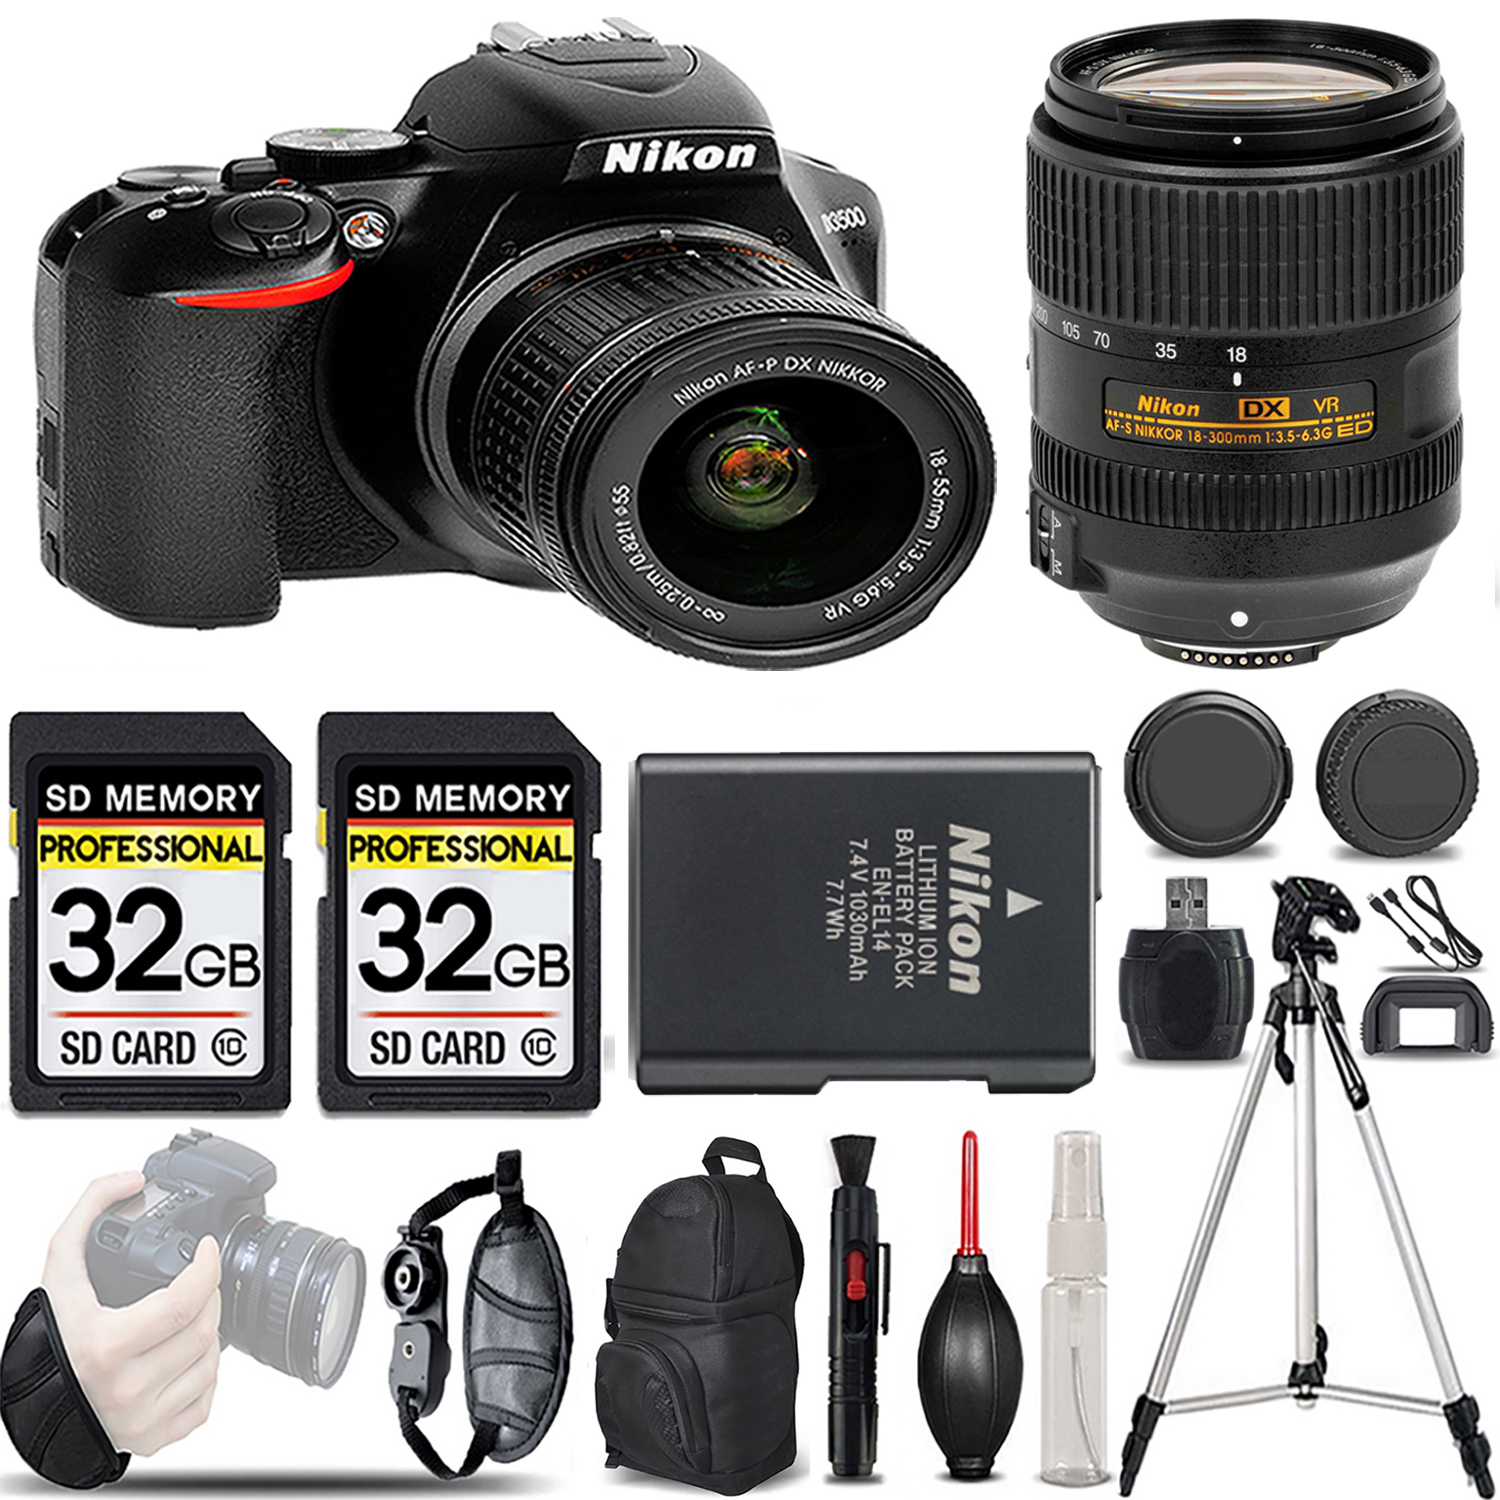 D3500 DSLR Camera with 18-55mm Lens + 18- 300mm Lens - LOADED KIT *FREE SHIPPING*